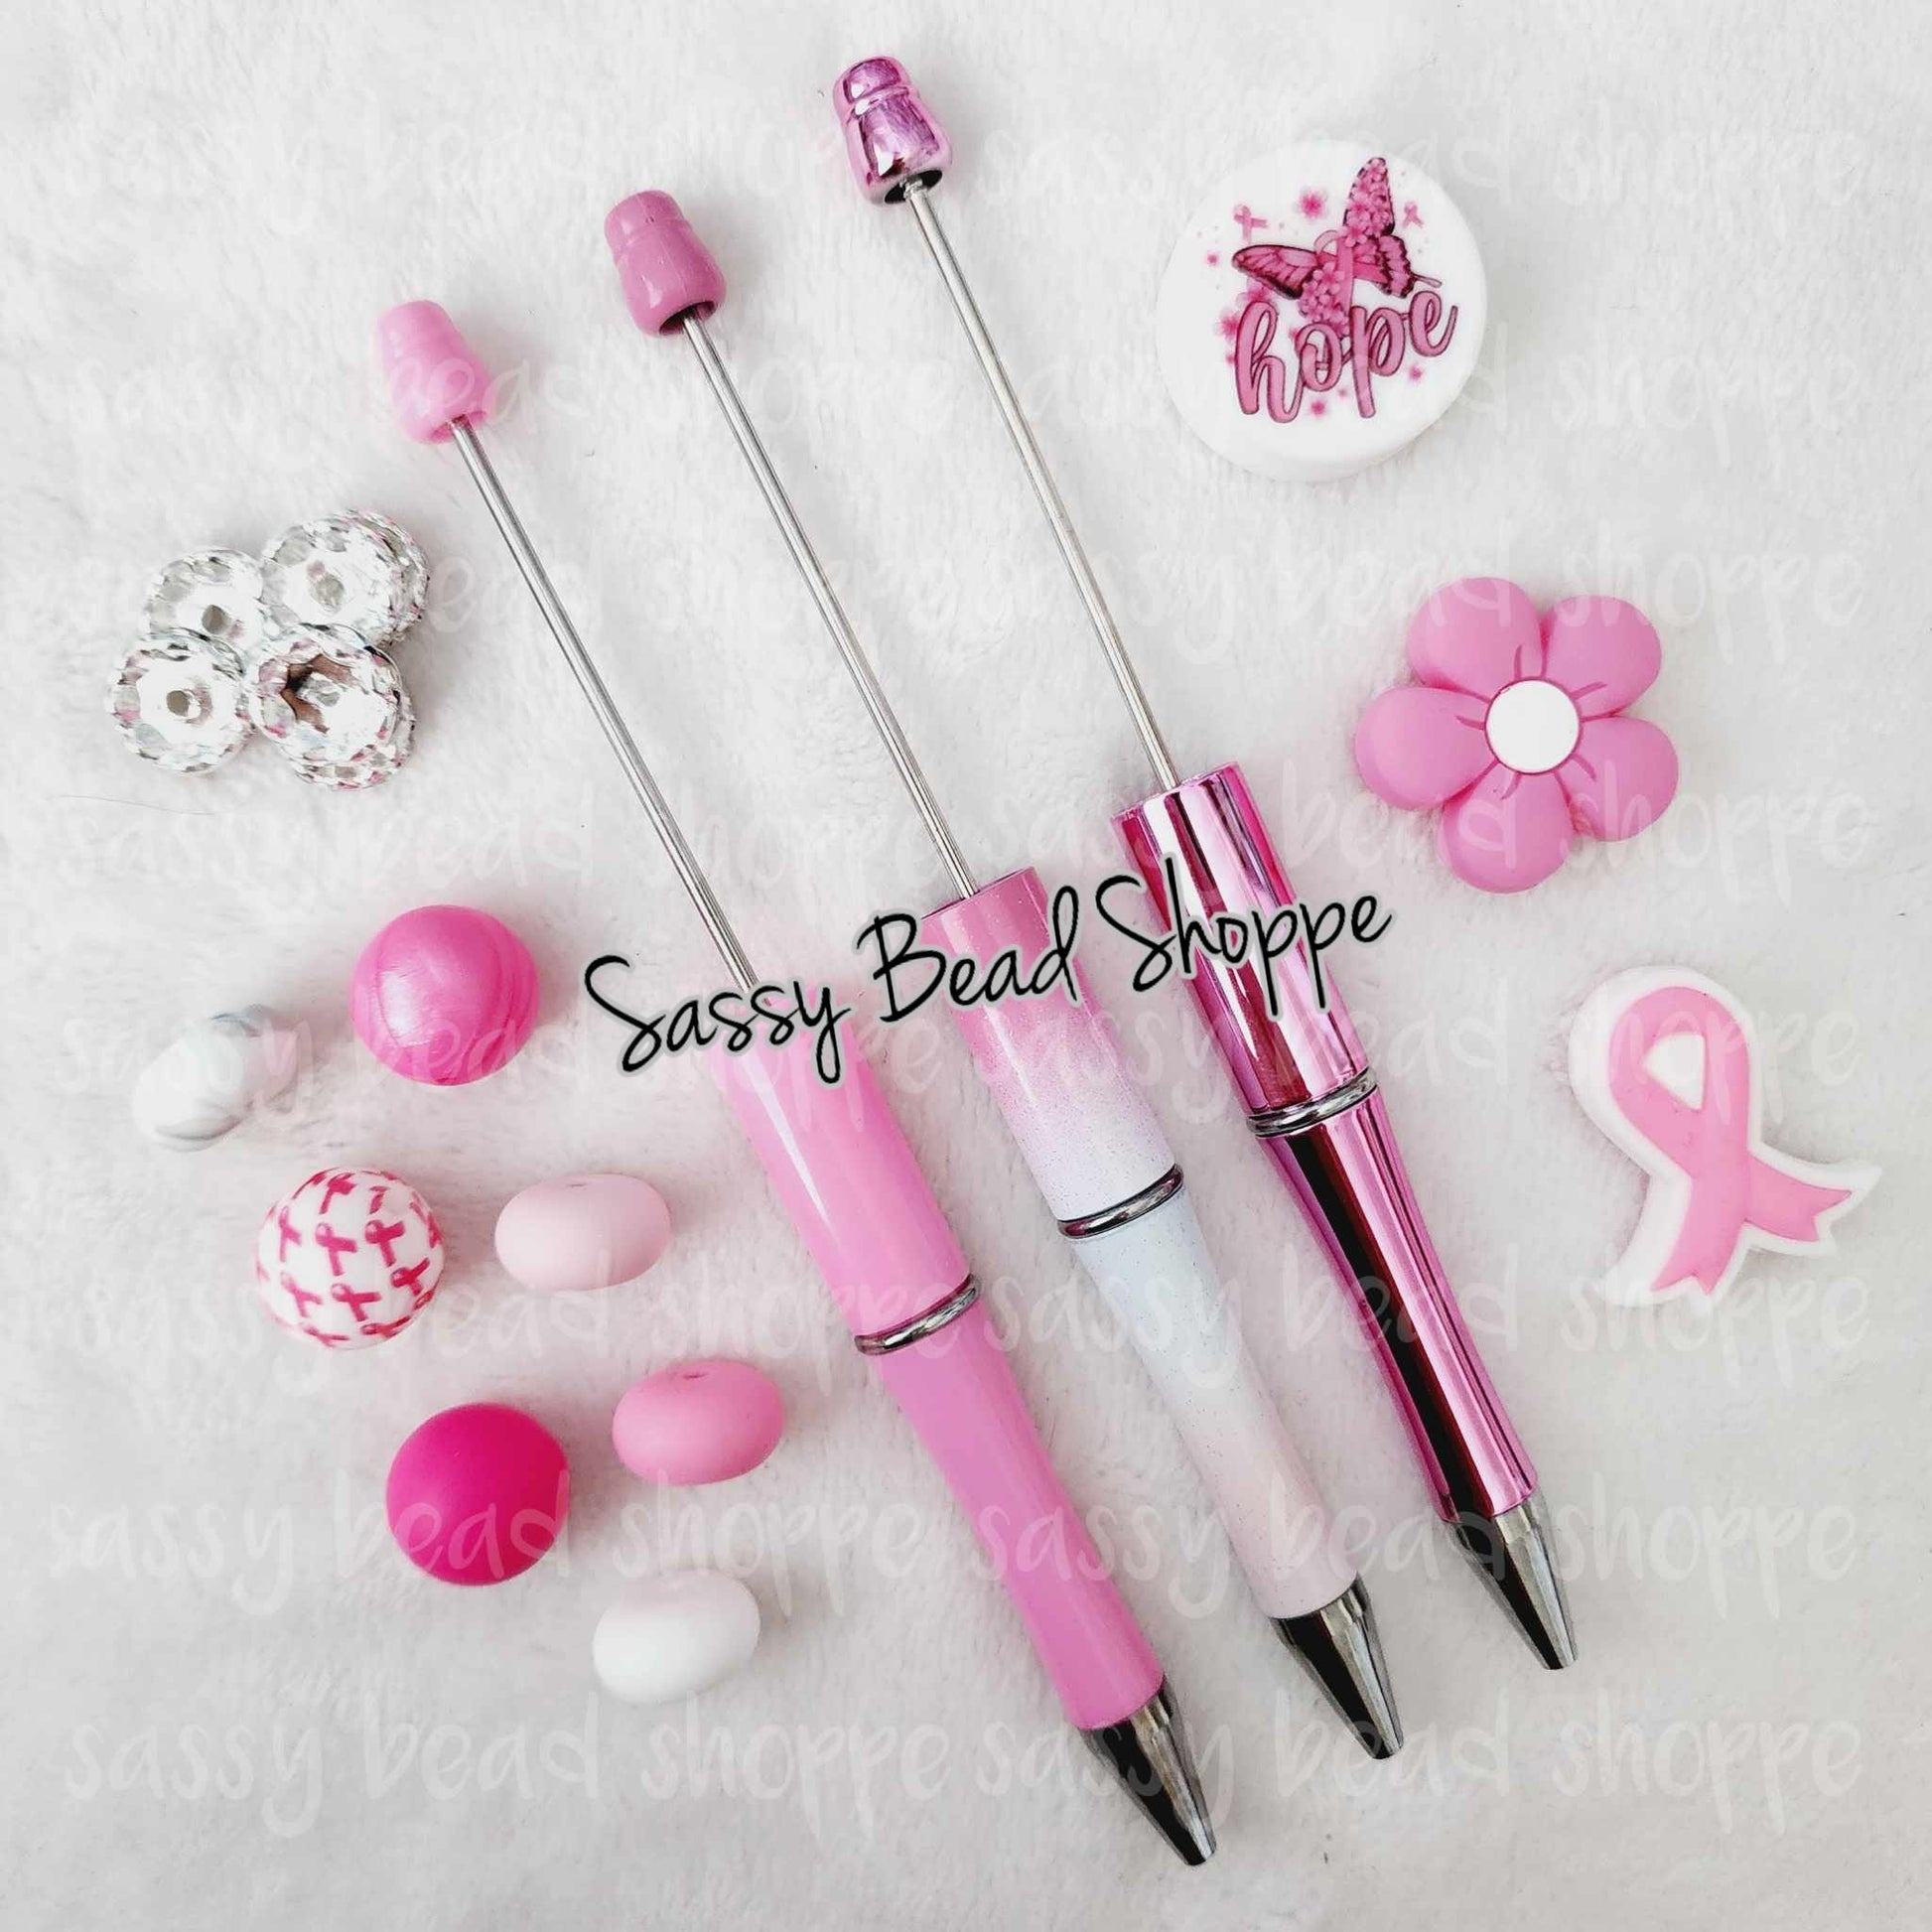 Sassy Bead Shoppe Pink Strong Pen Kit